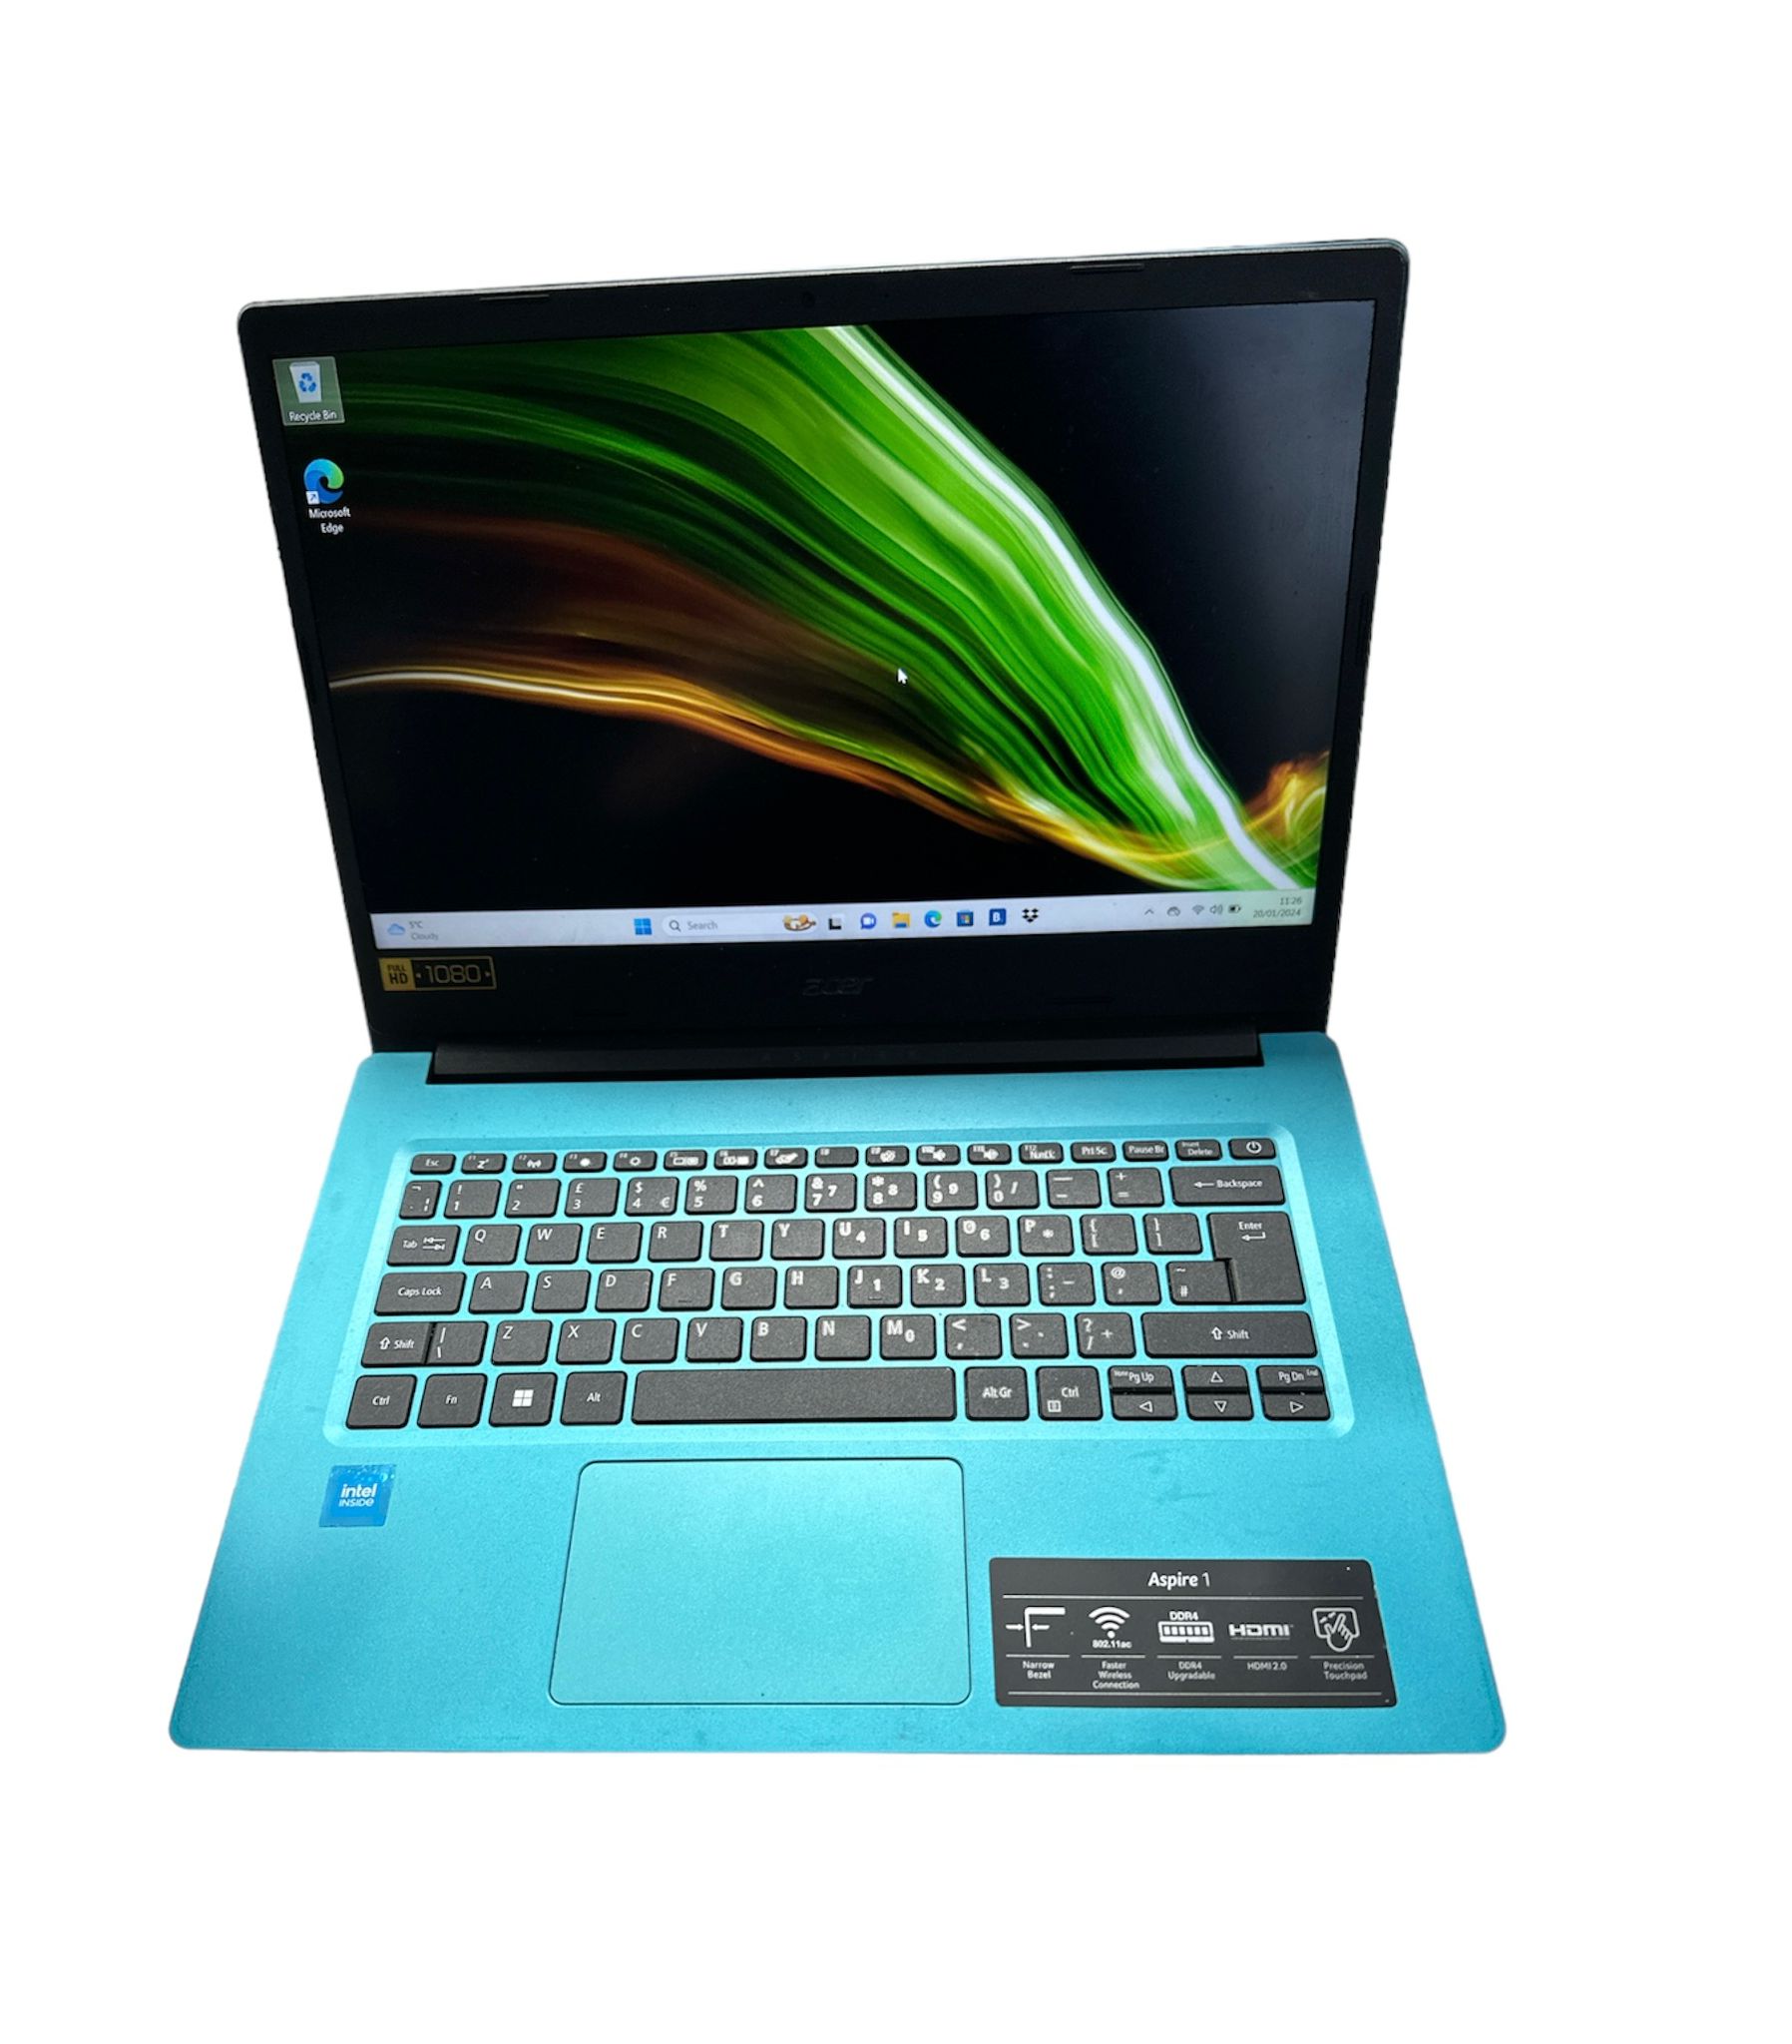 Acer Aspire 1 Intel Celeron 4GB RAM 64GB SD Turquoise     